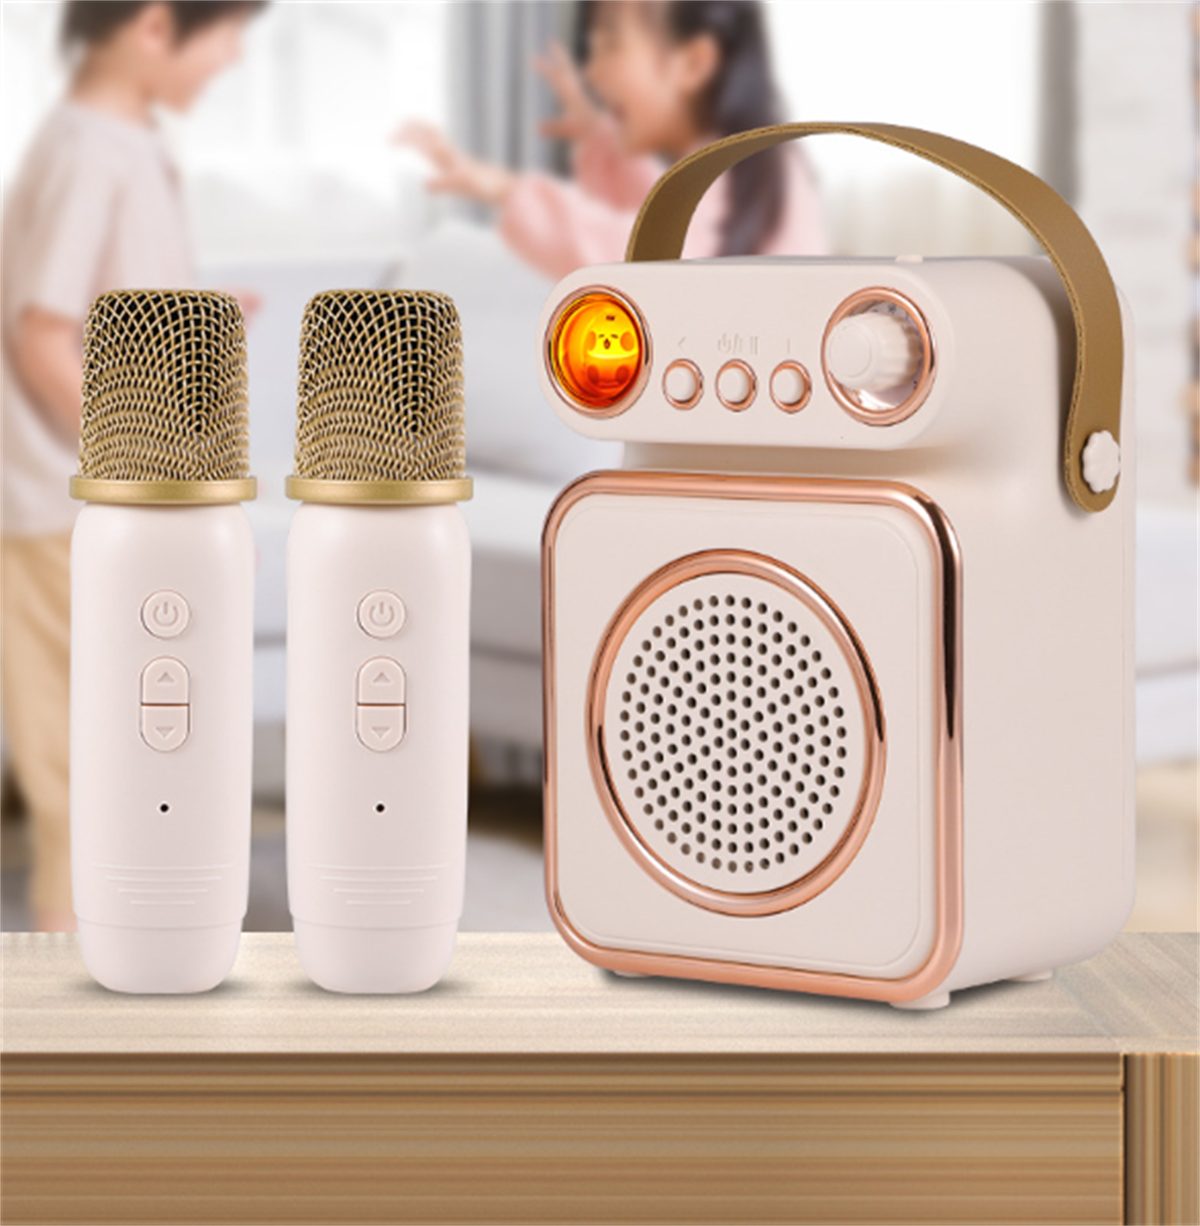 Rosa kabelloses Mikrofon-Komplettgerät Lautsprecher carefully selected Tragbares und Wireless Bluetooth-Audio-